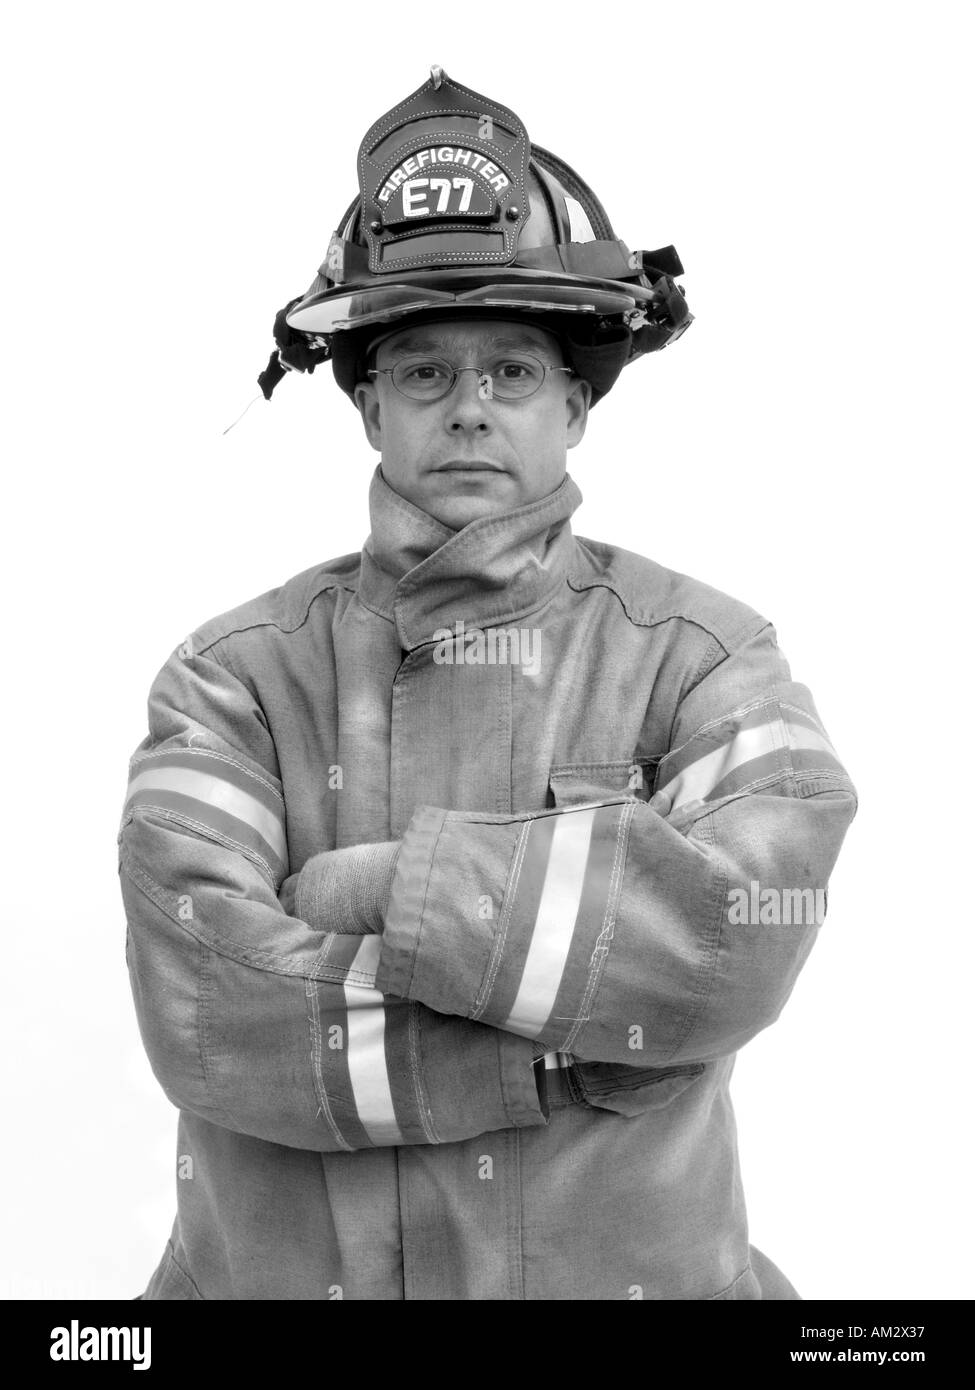 Firefighter portrait Stock Photo